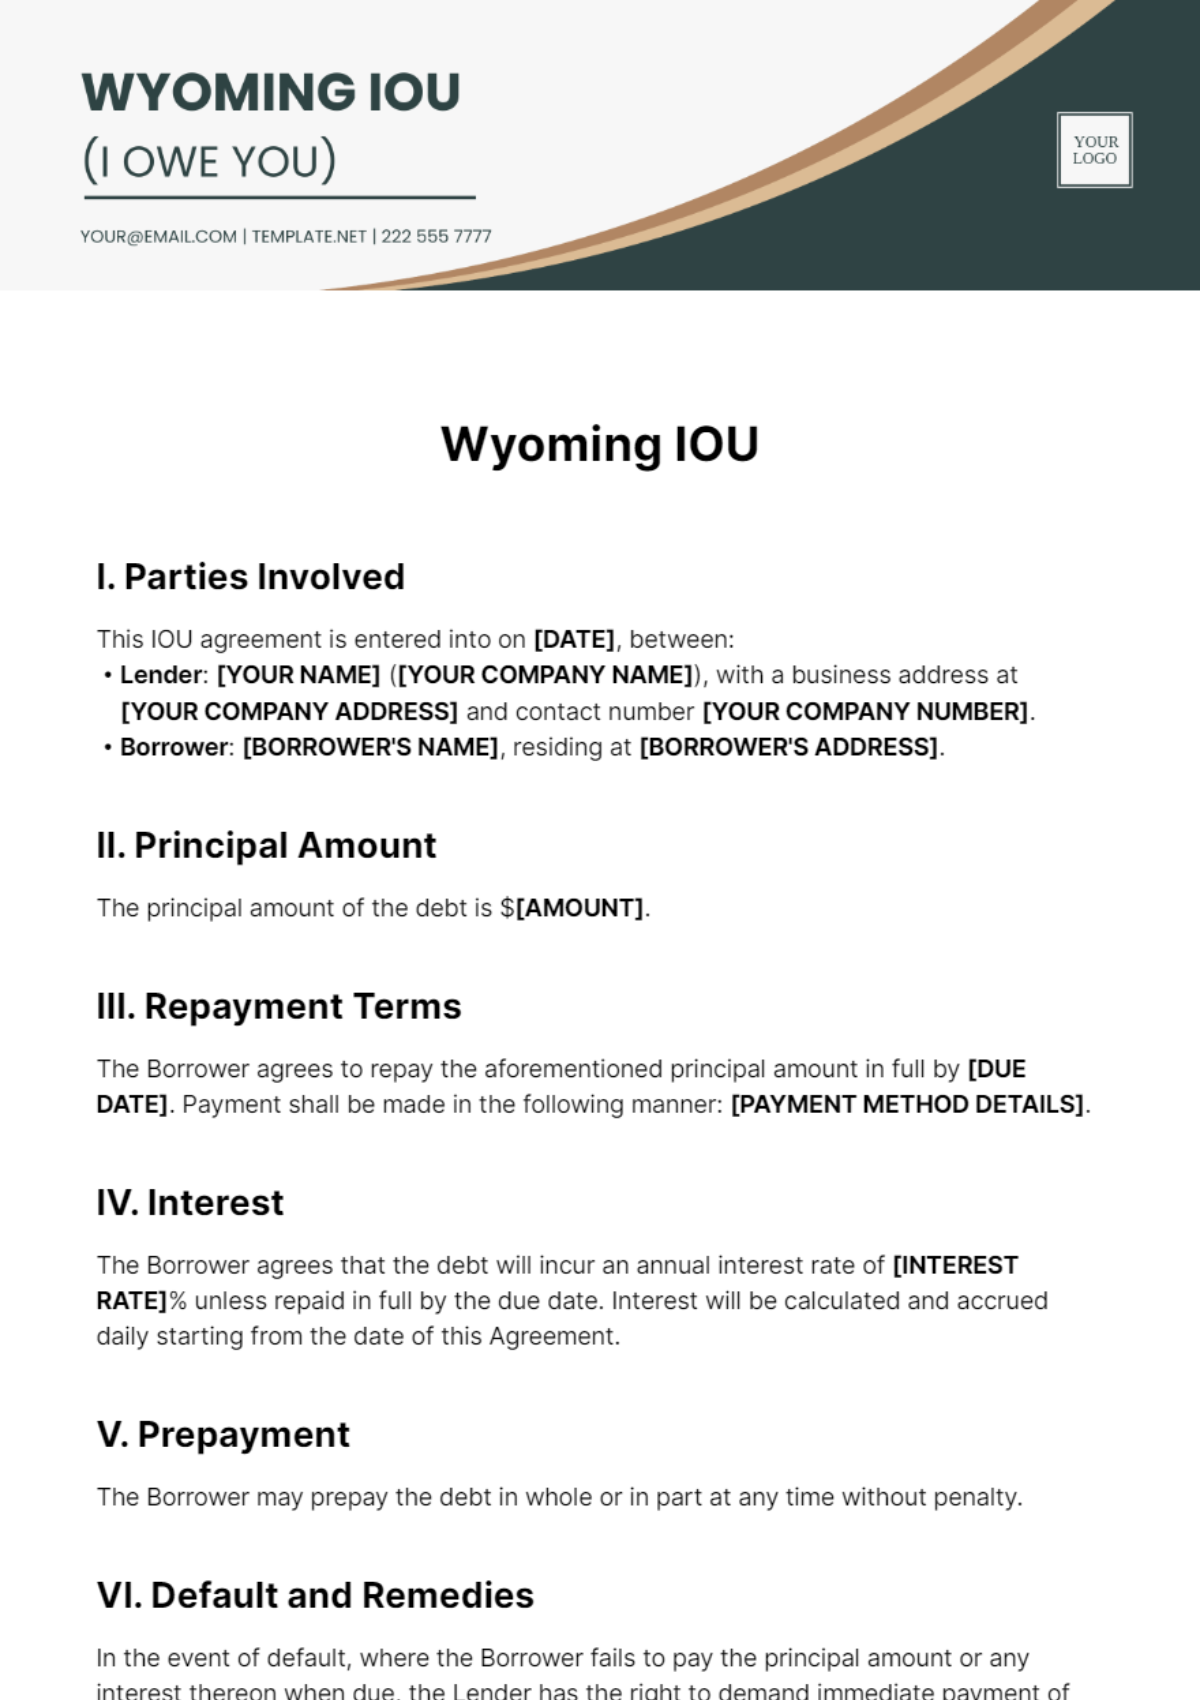 Wyoming IOU Template